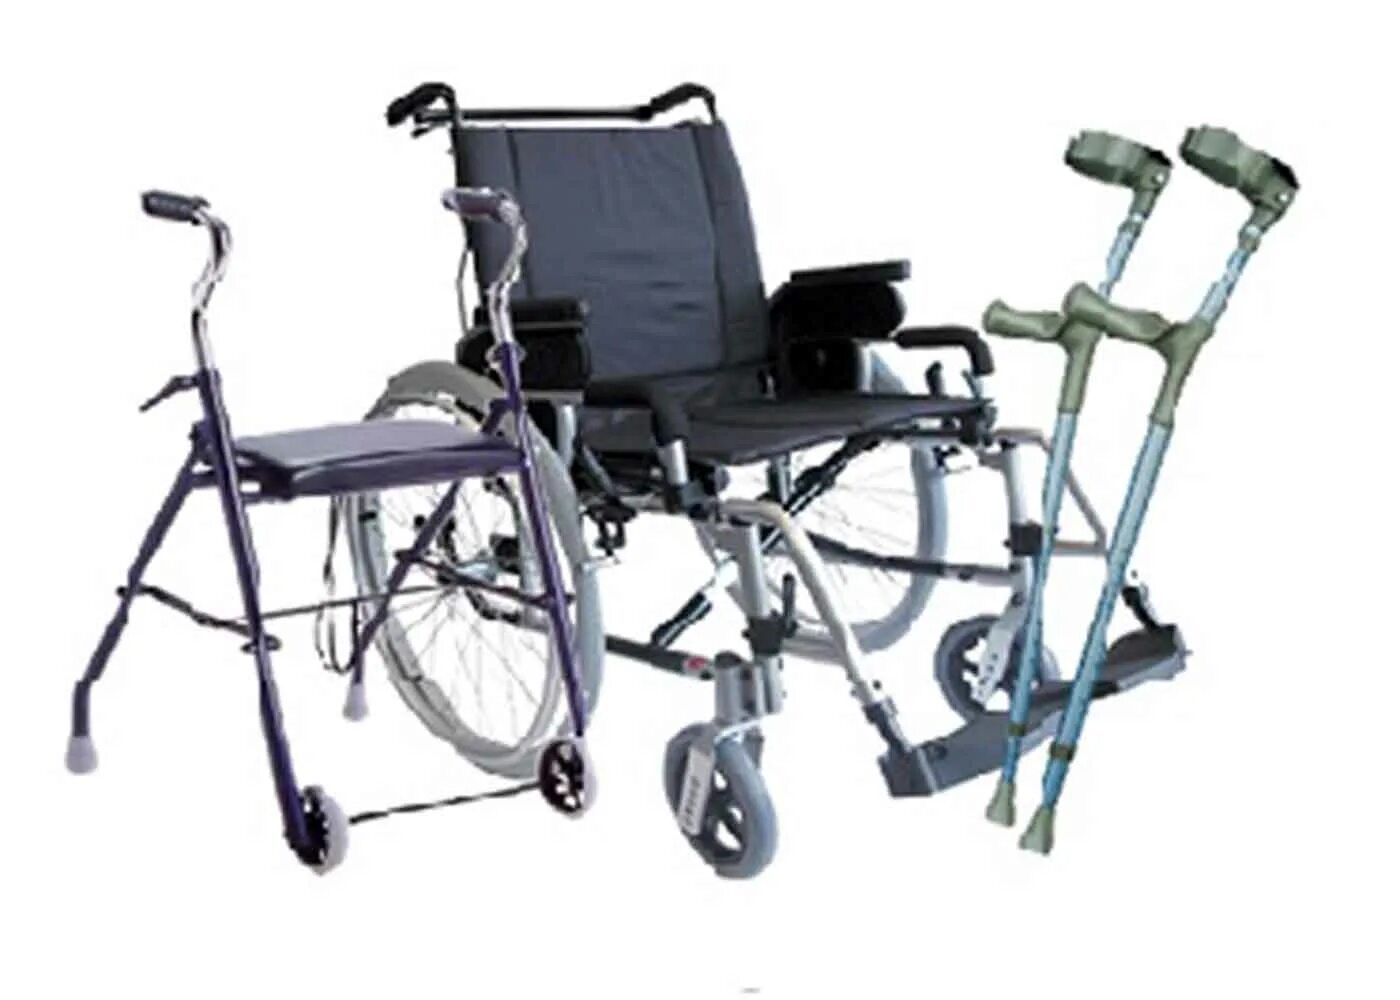 Прокат тср. ТСР В реабилитации. Обеспечение ТСР инвалидов. Технические средства реабилитации для инвалидов. Технические средства реабилитации для детей инвалидов.